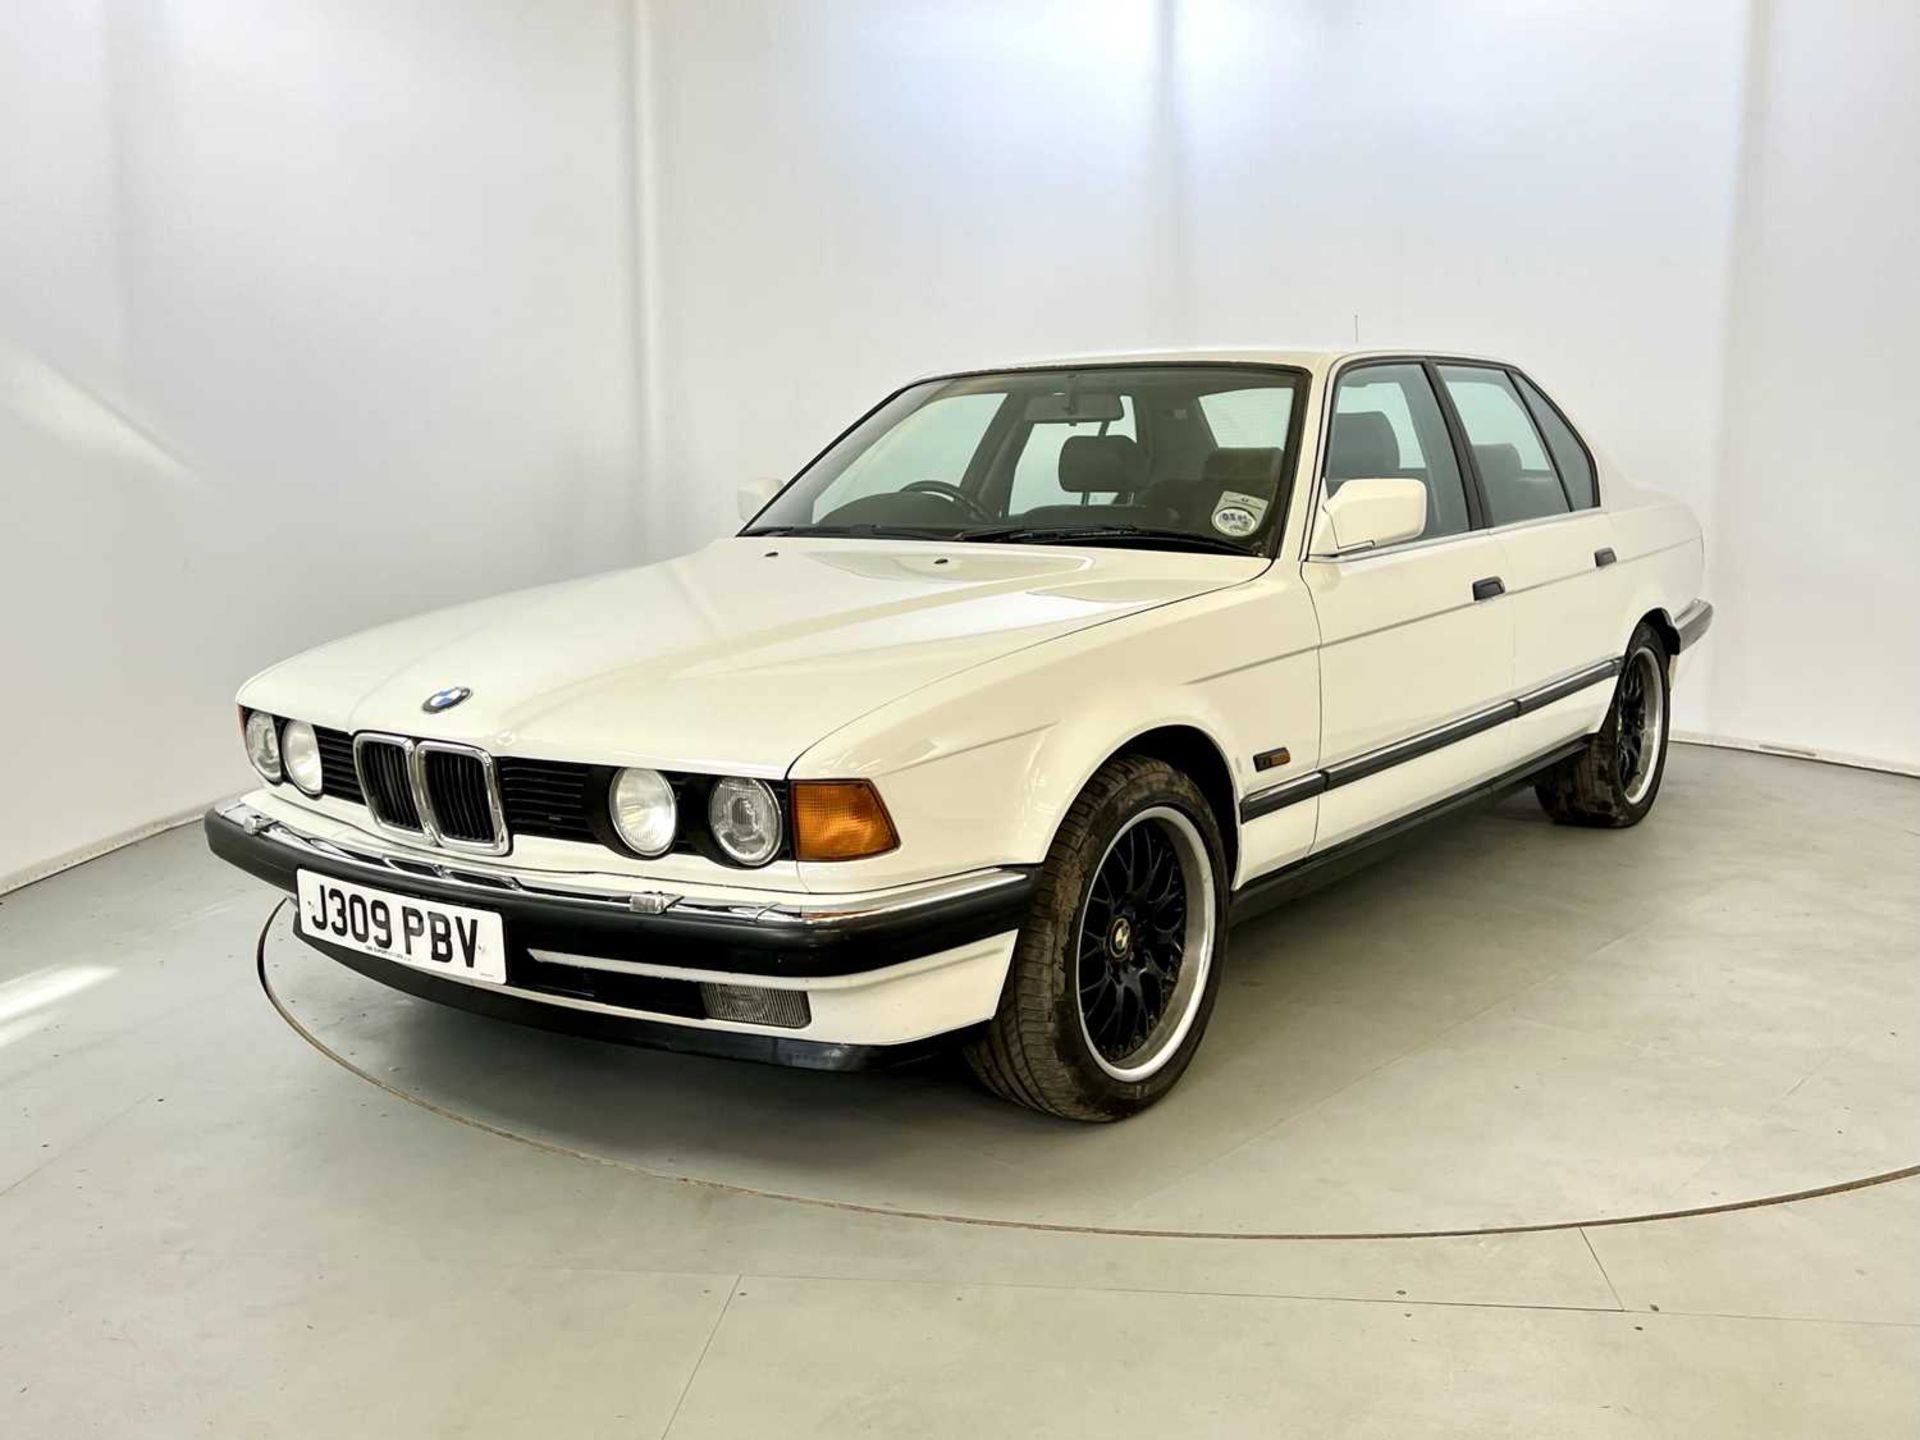 1992 BMW 735i - Image 3 of 34